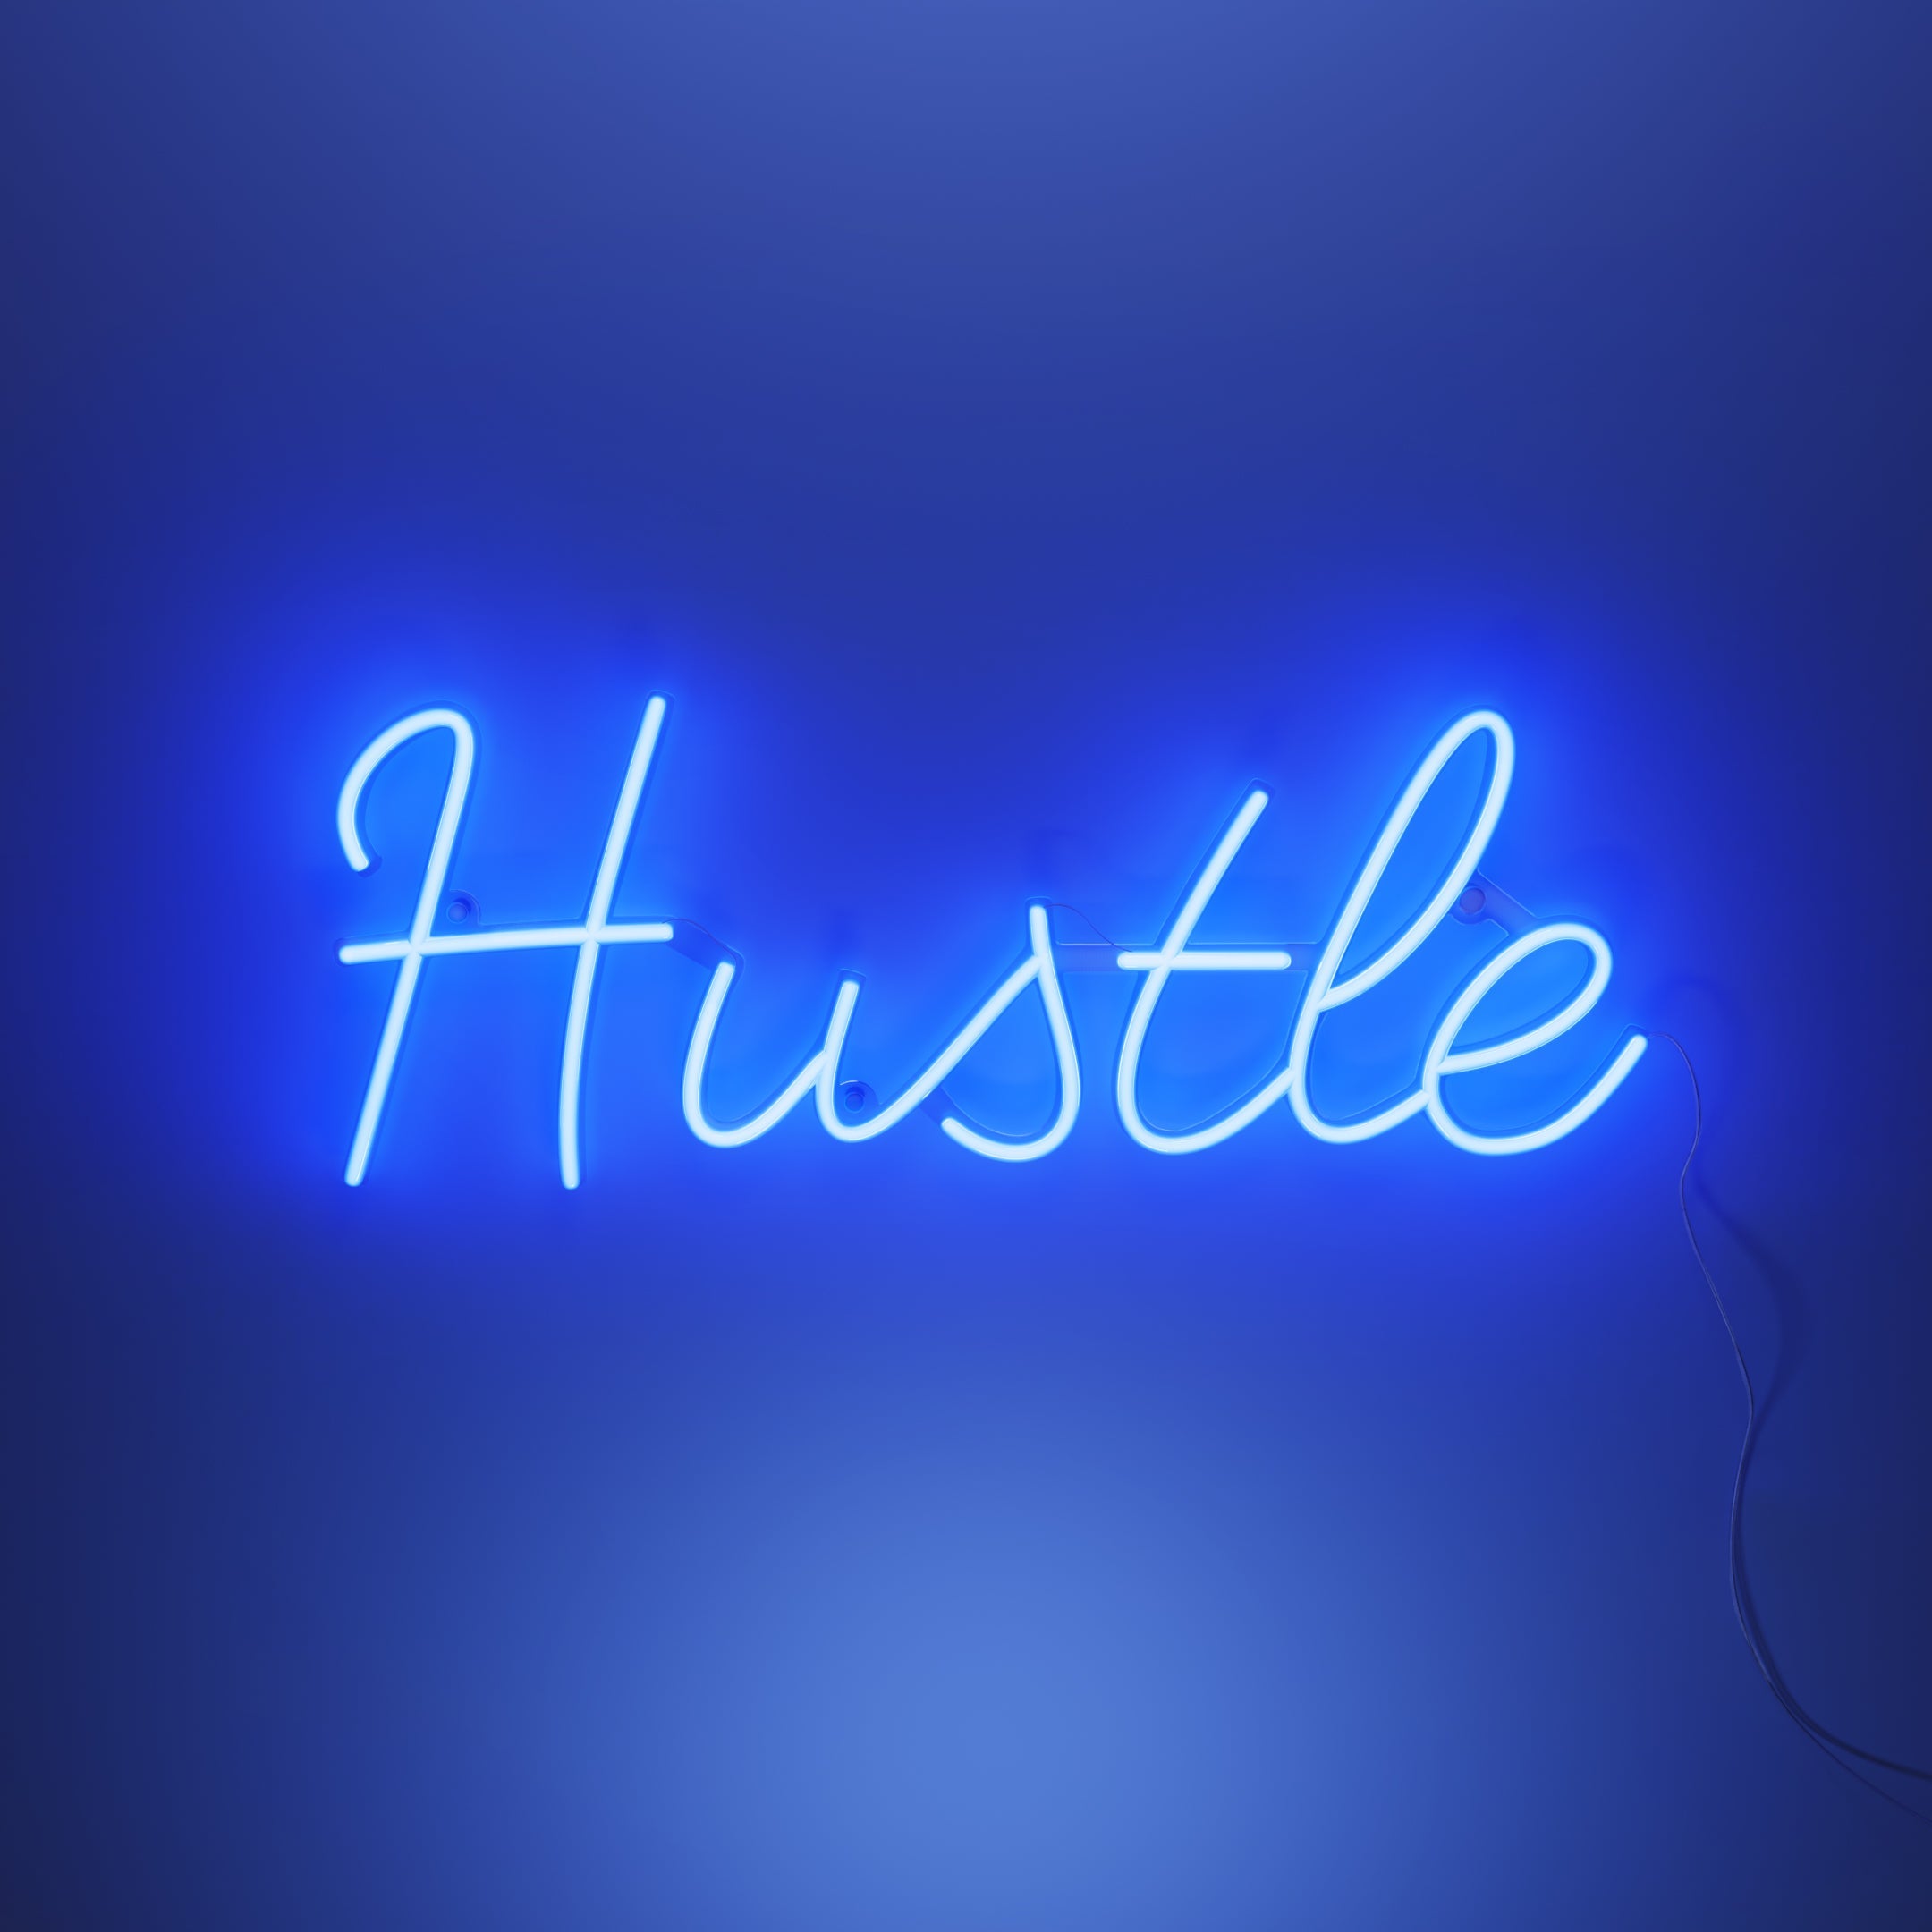 Hustle - Neon Tabela - Neonbir